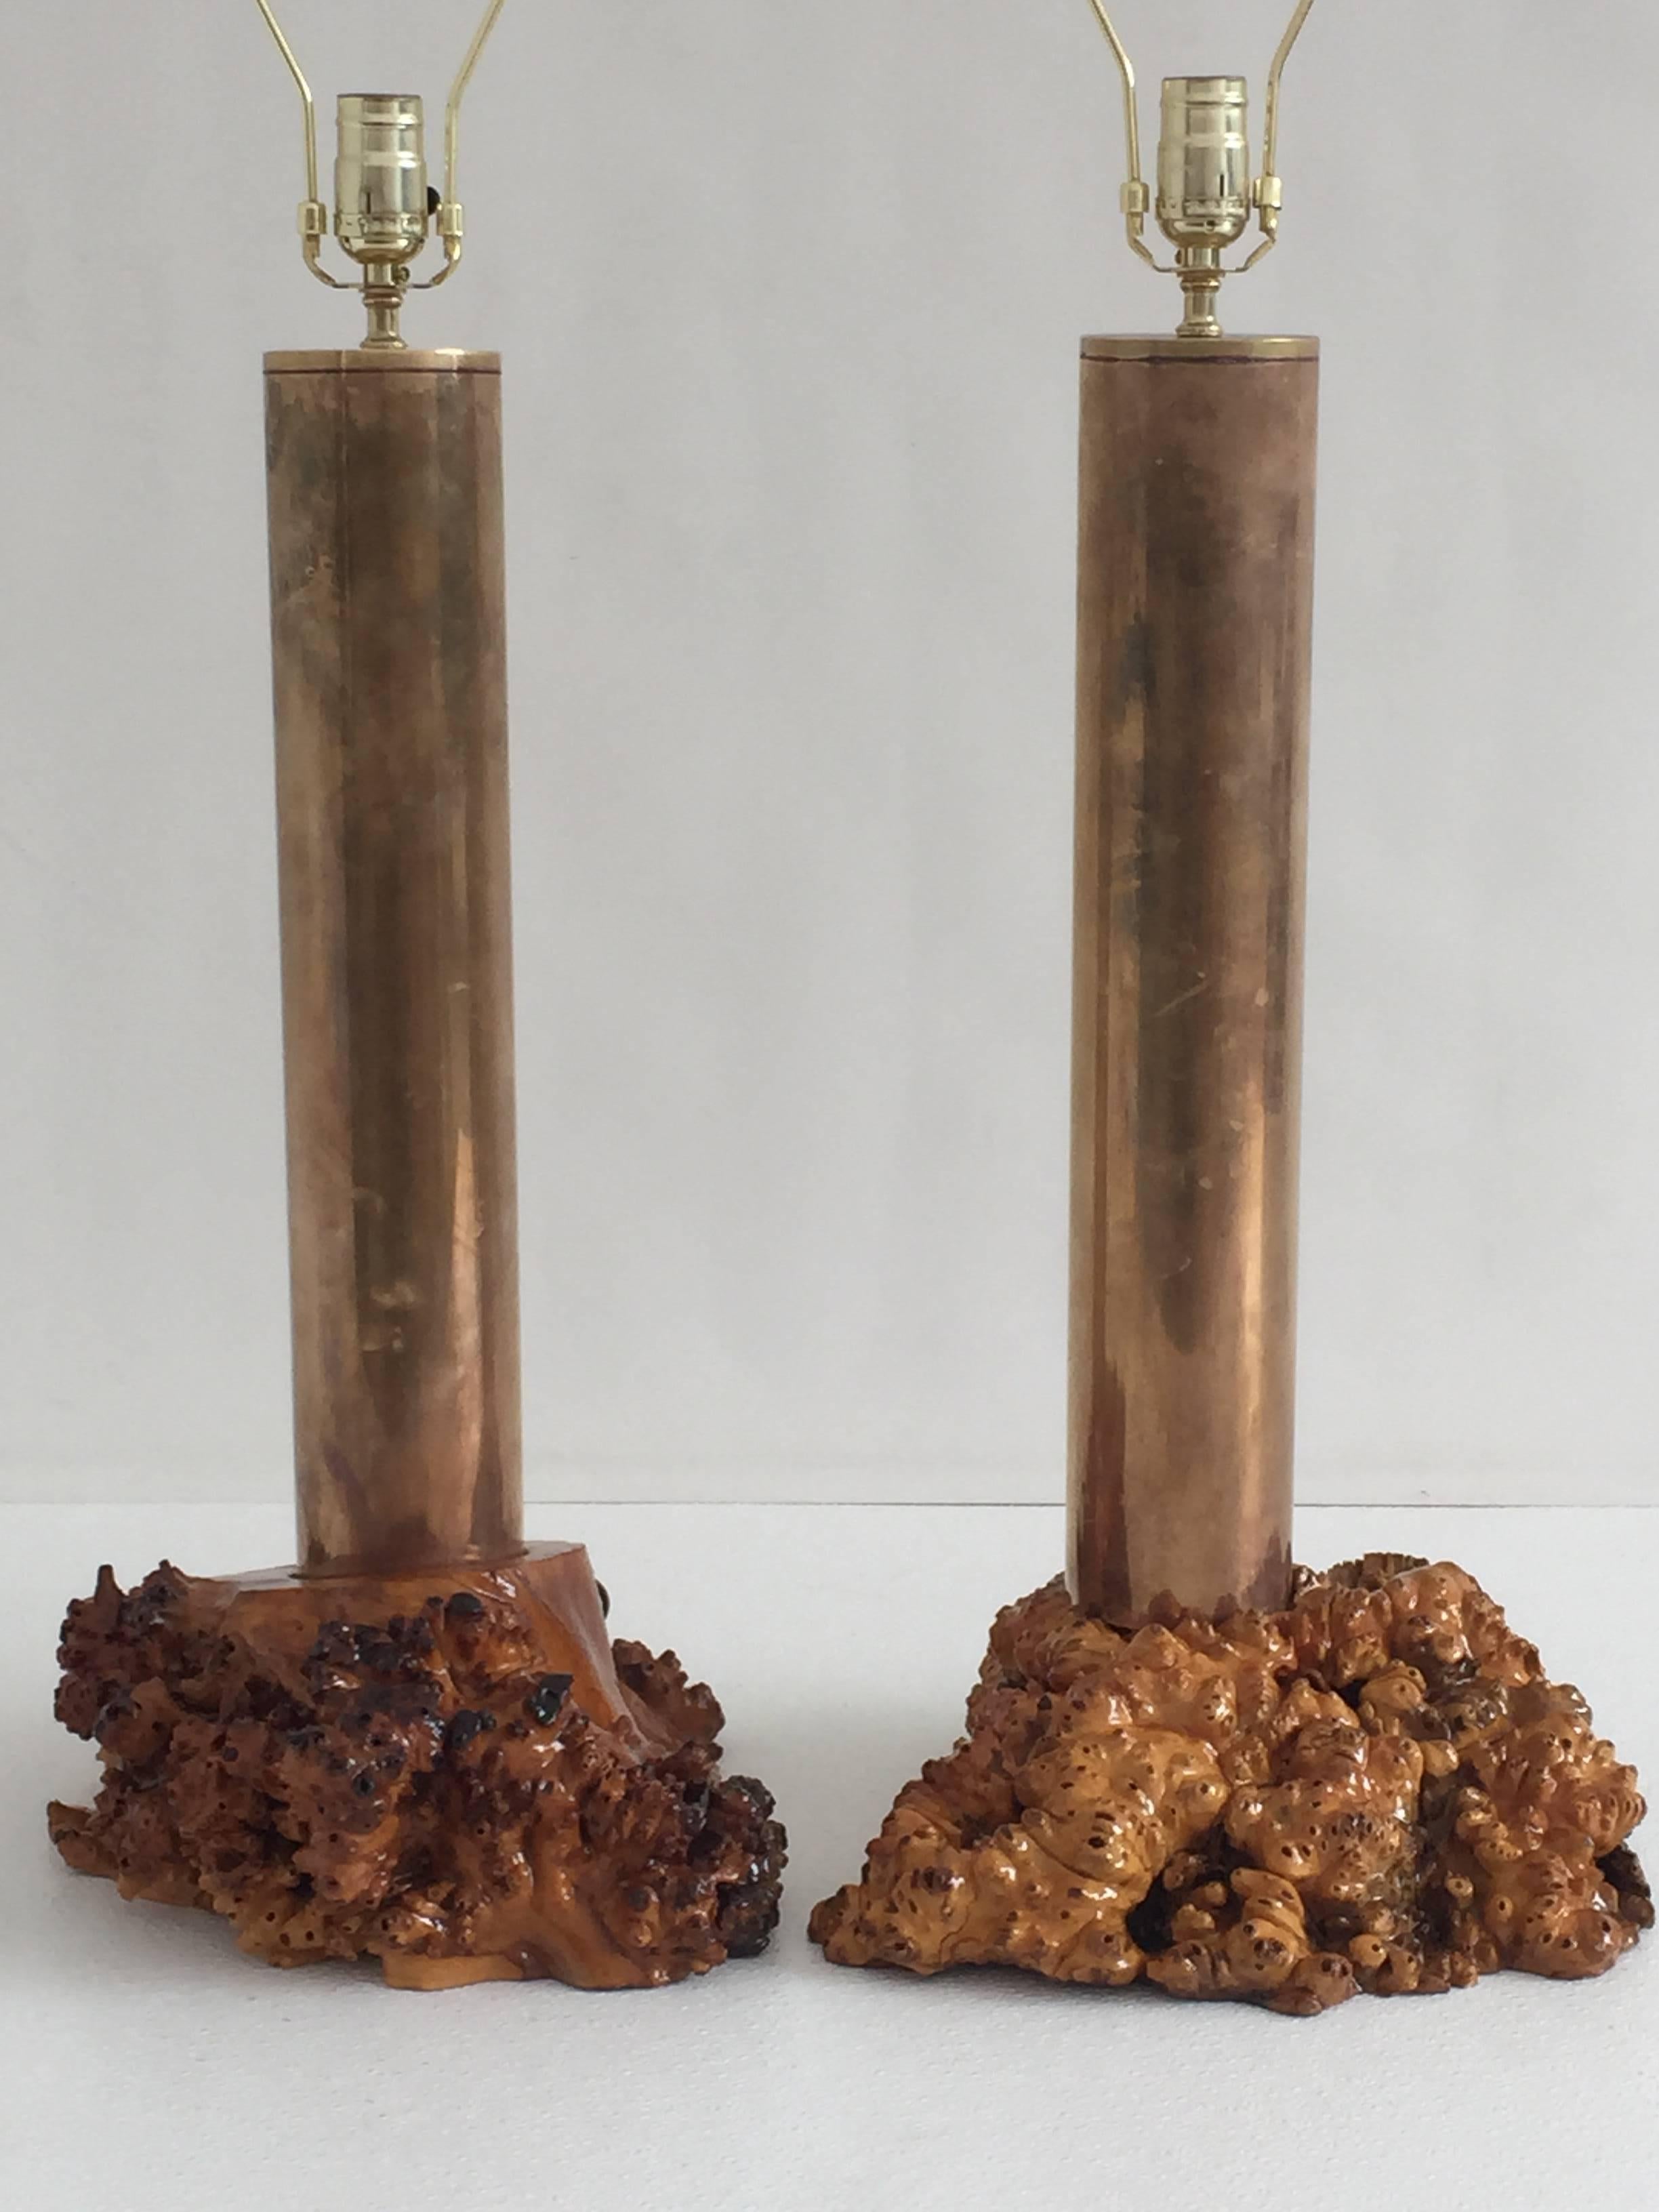 Pair of California studio modern patinated brass and Manzanita root burl lamps.
Brass cylinder is 3.5